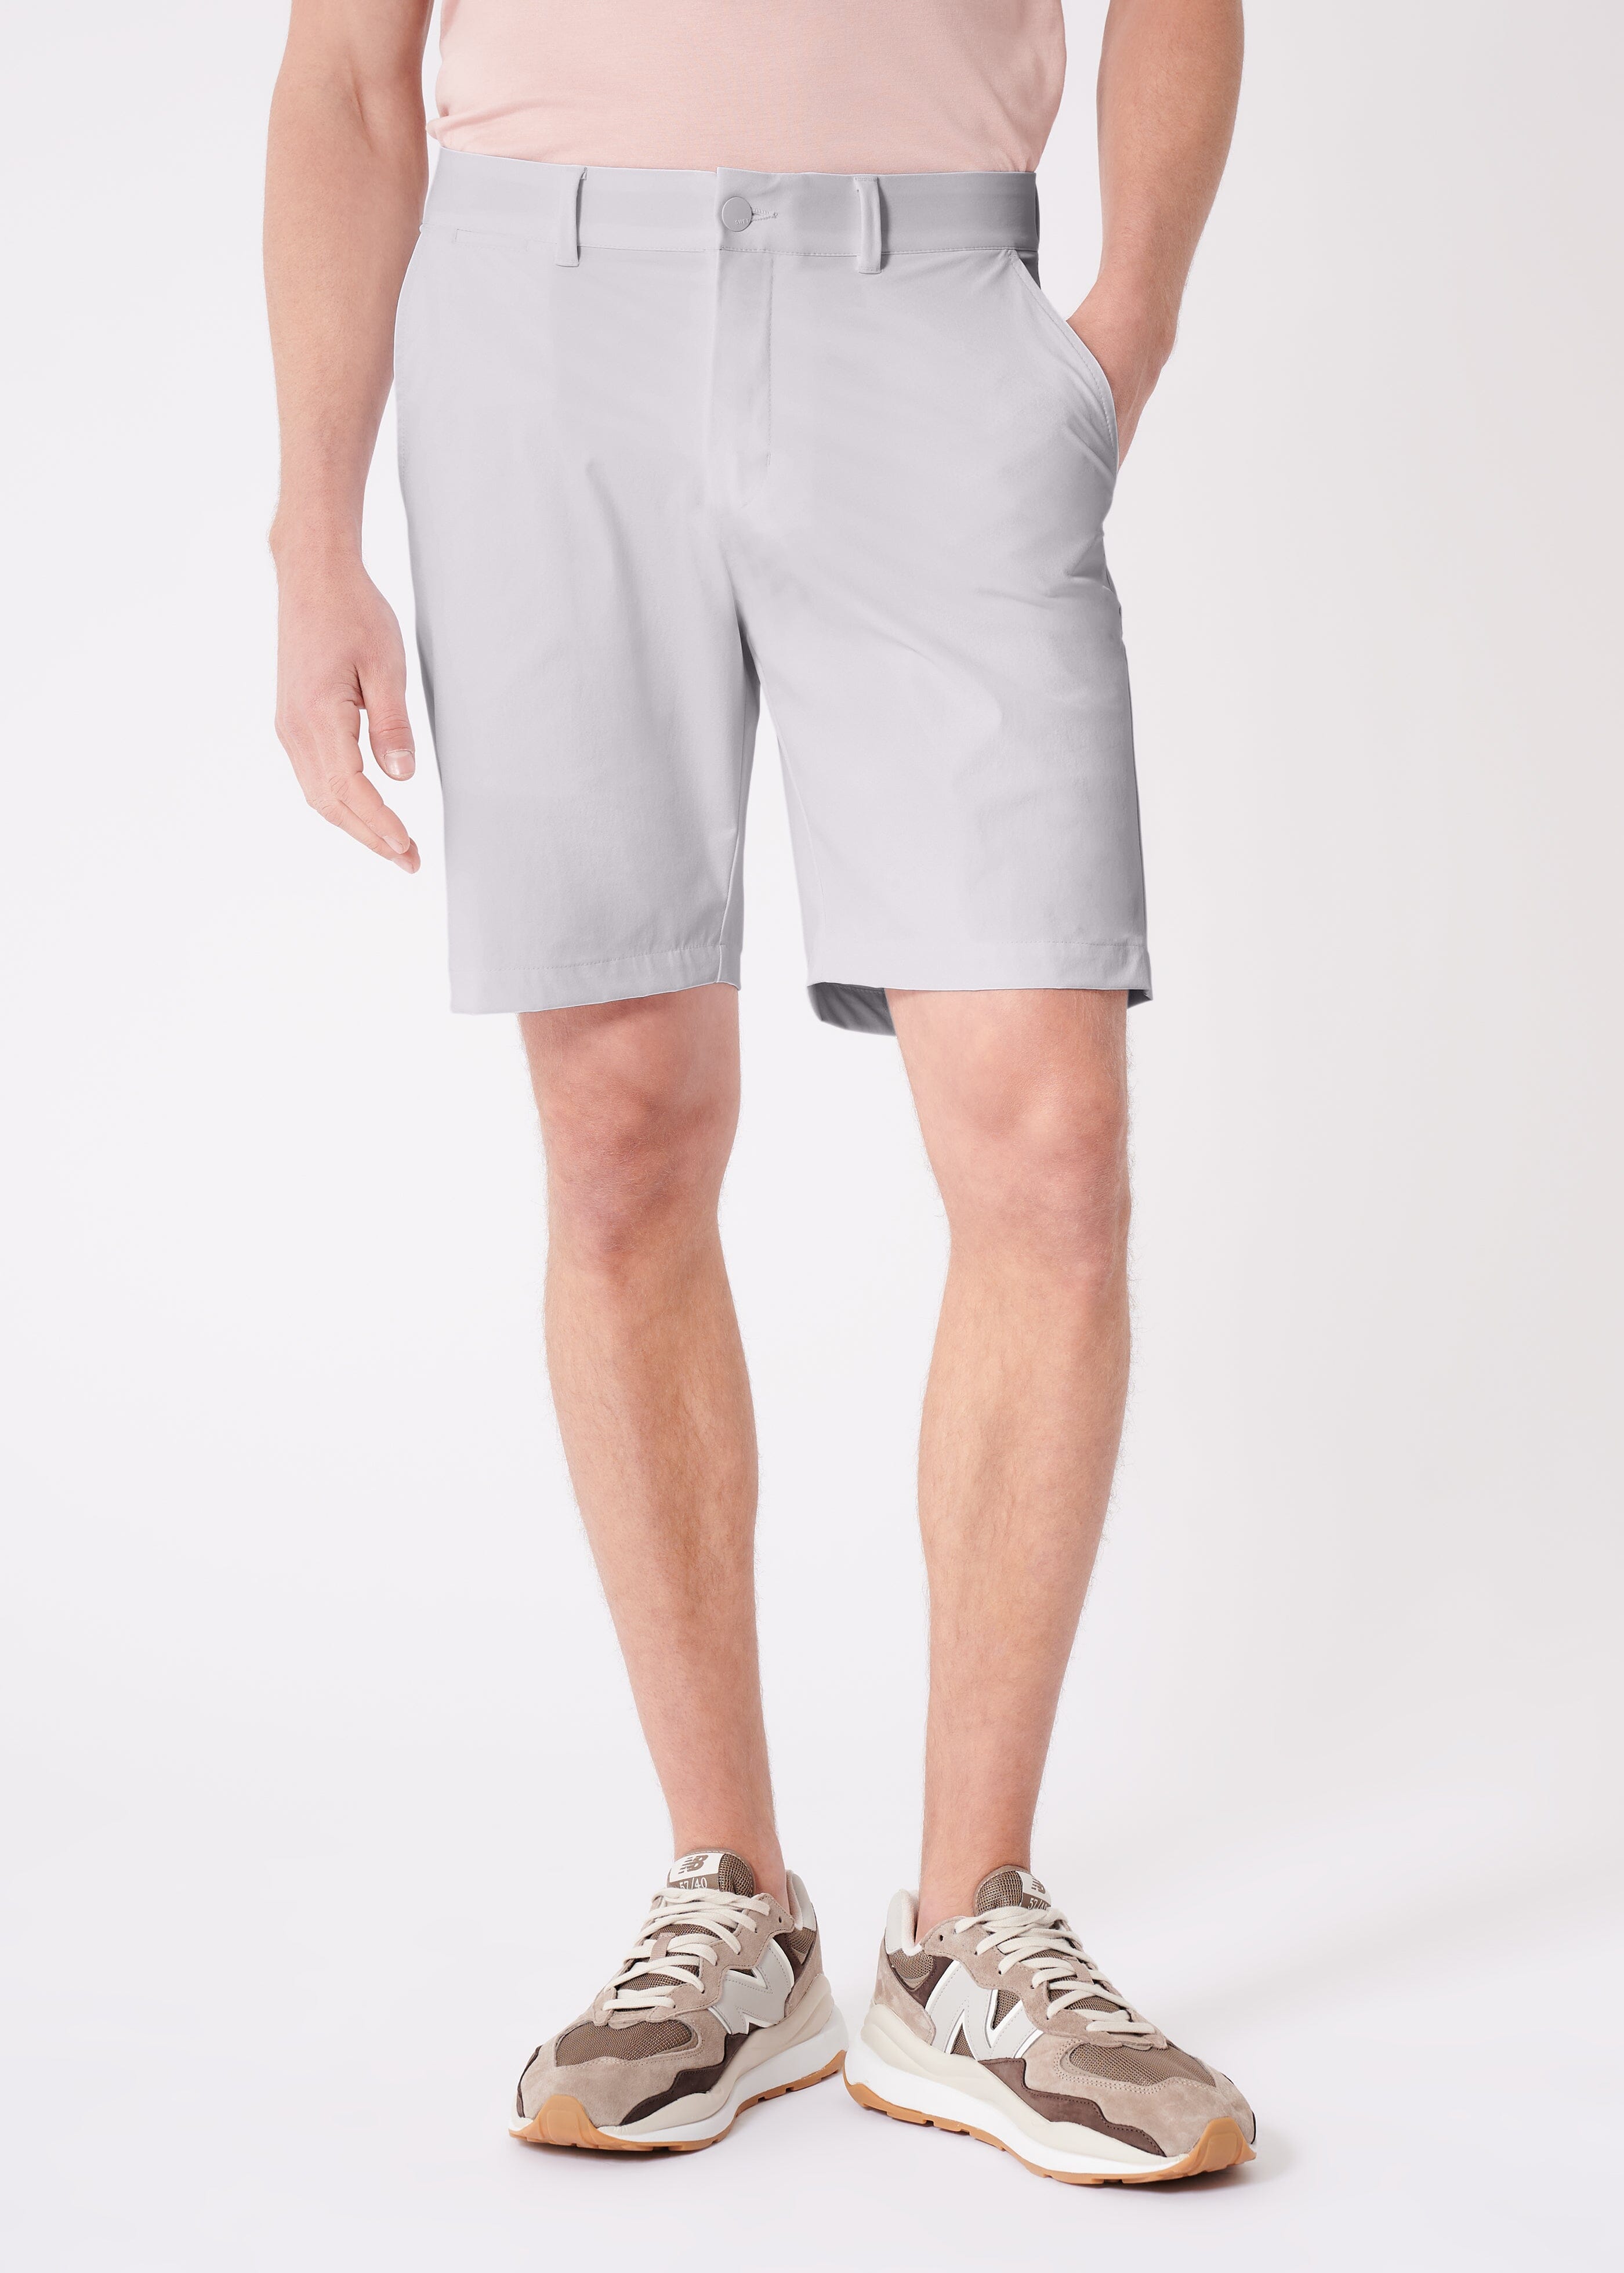 Men's Activewear Shorts, Men's Gym Shorts with Liner | Swet Tailor®